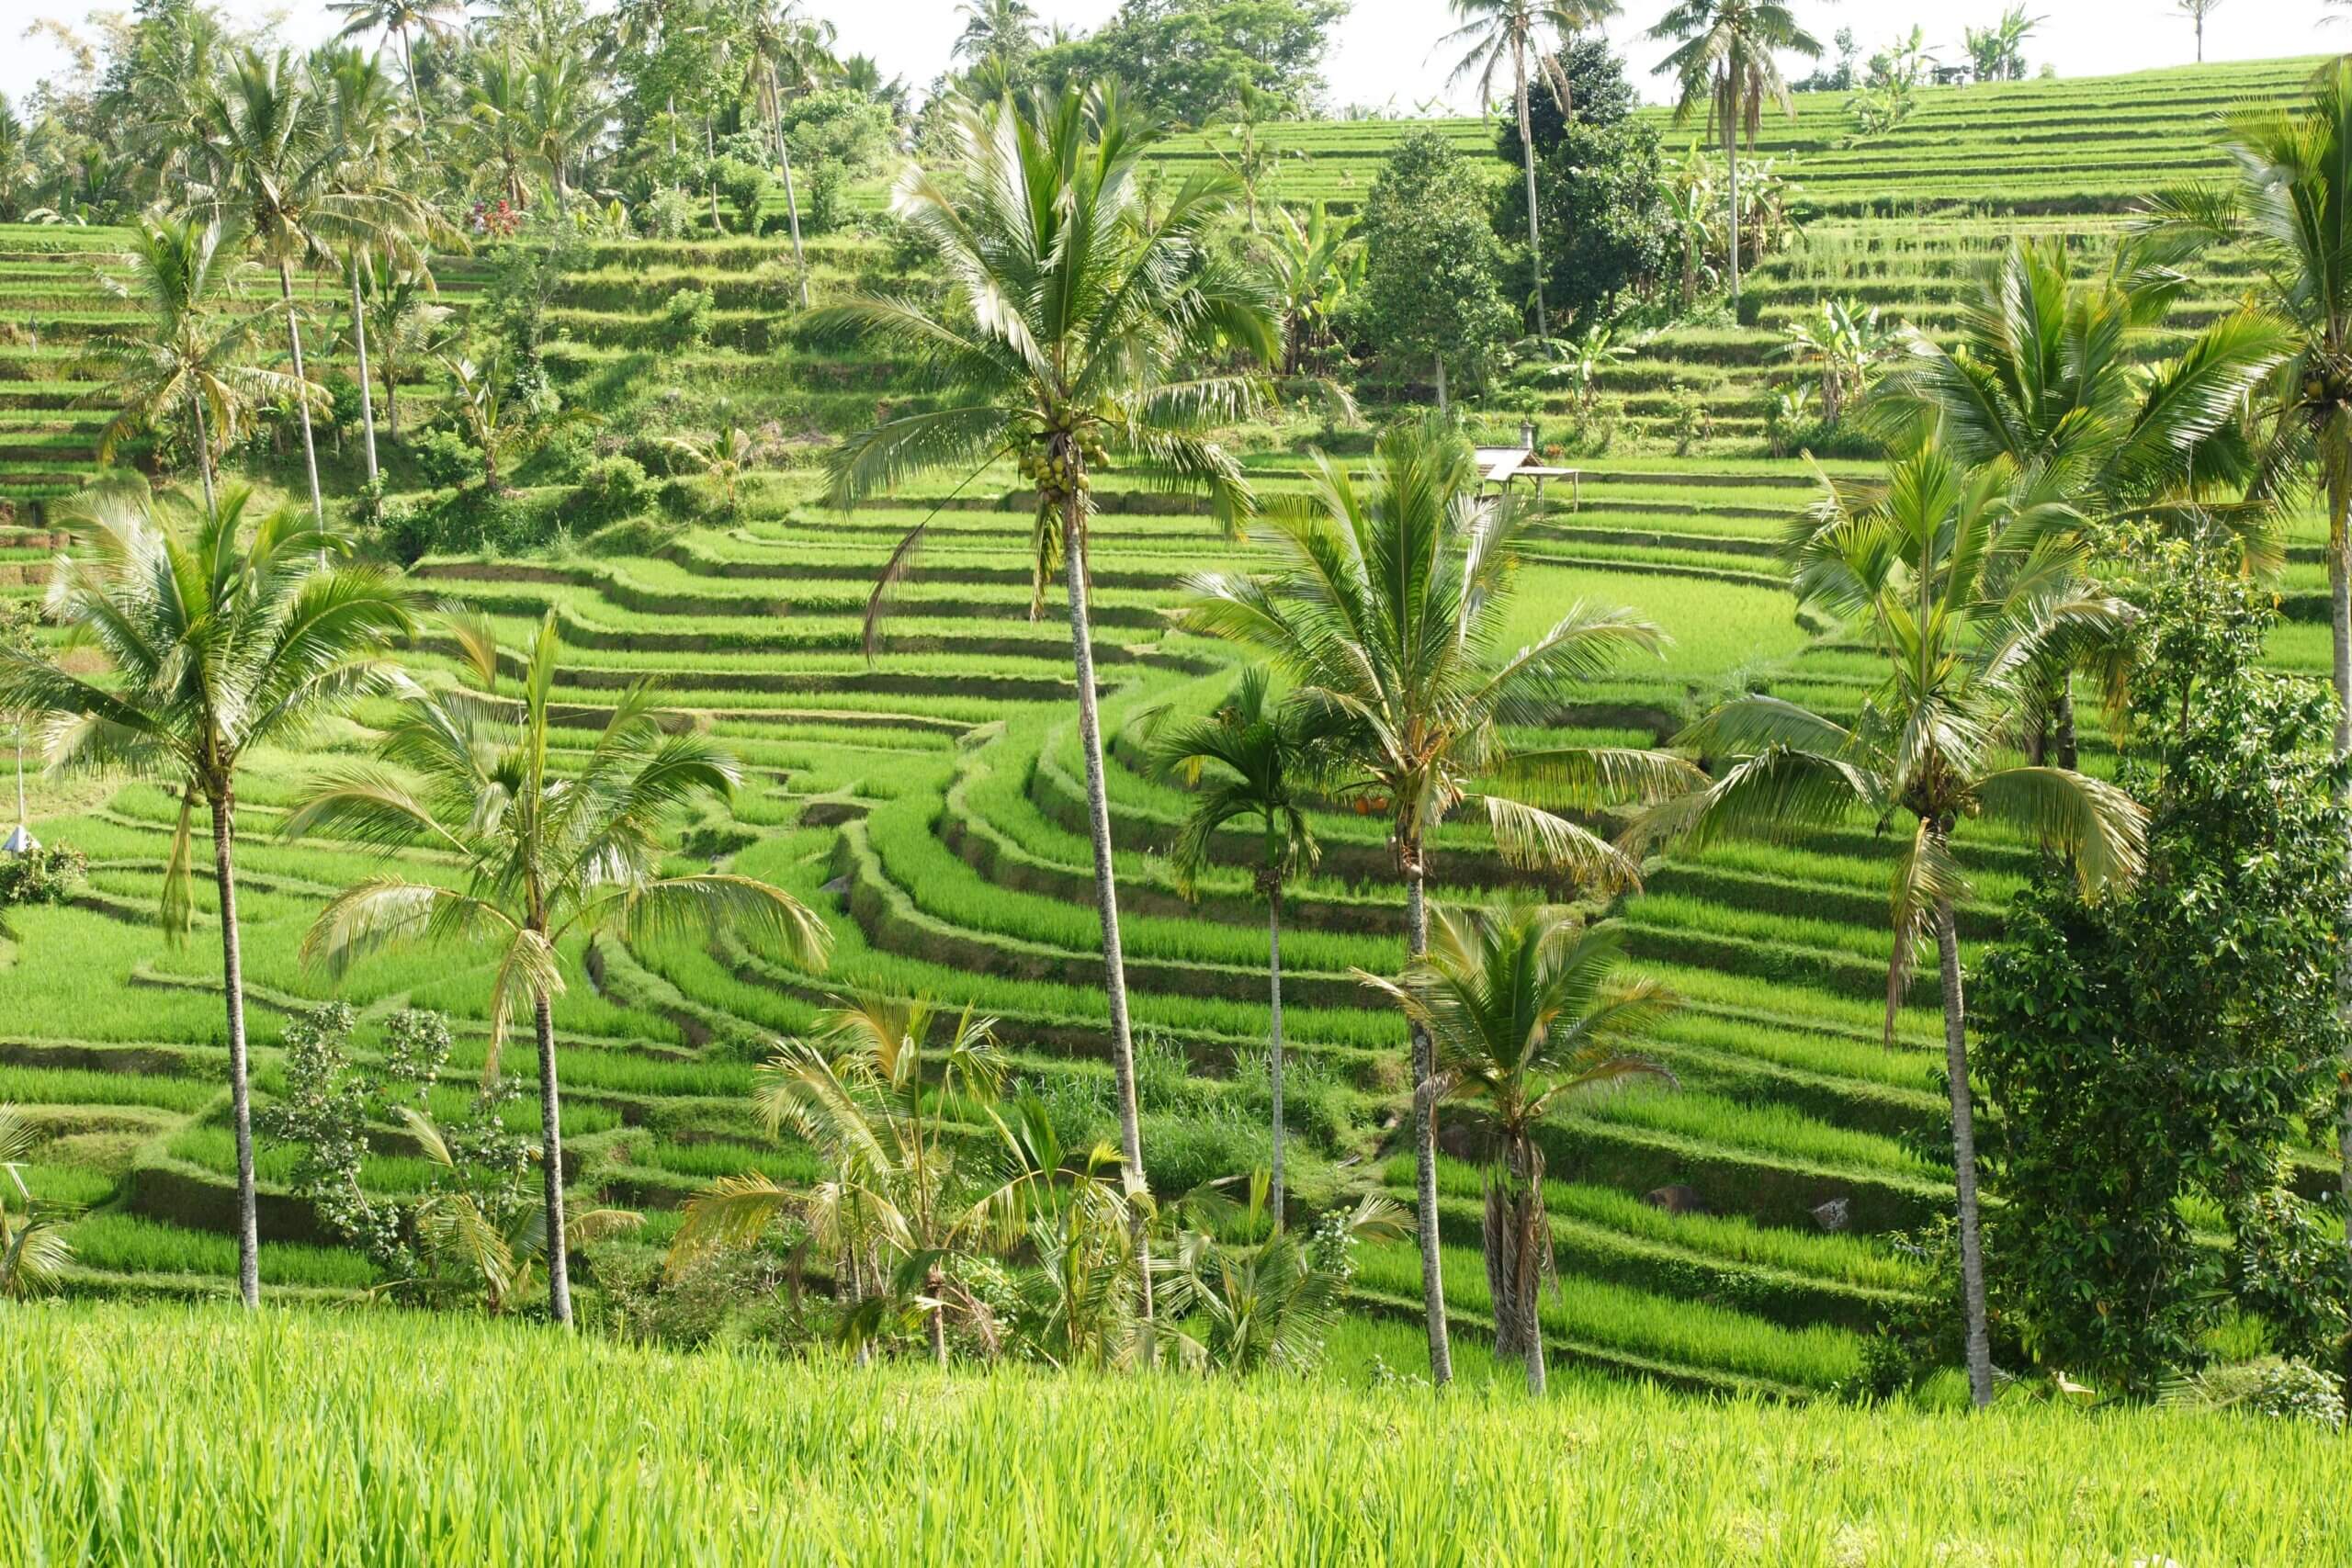 Les rizières de Bali